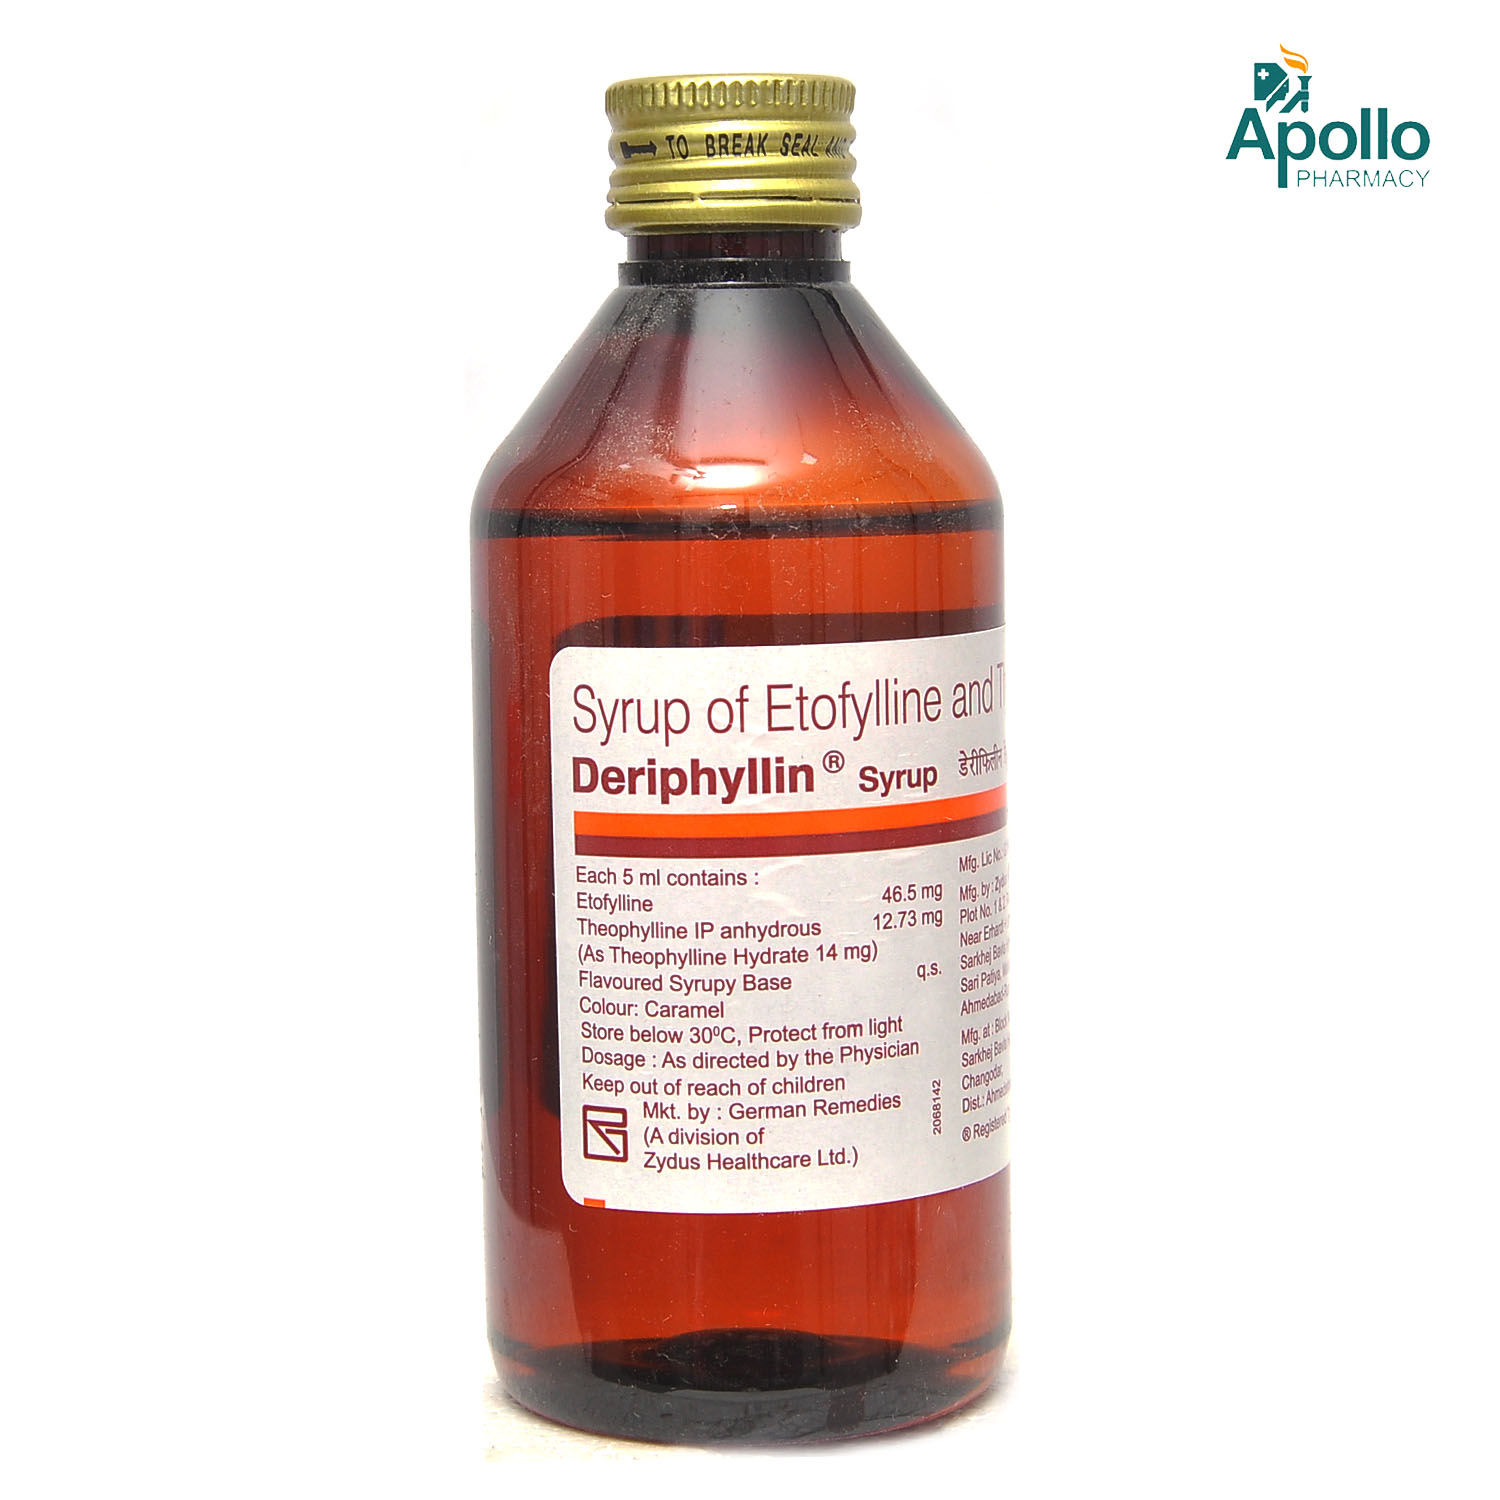 Buy Deriphyllin Syrup 200 ml Online